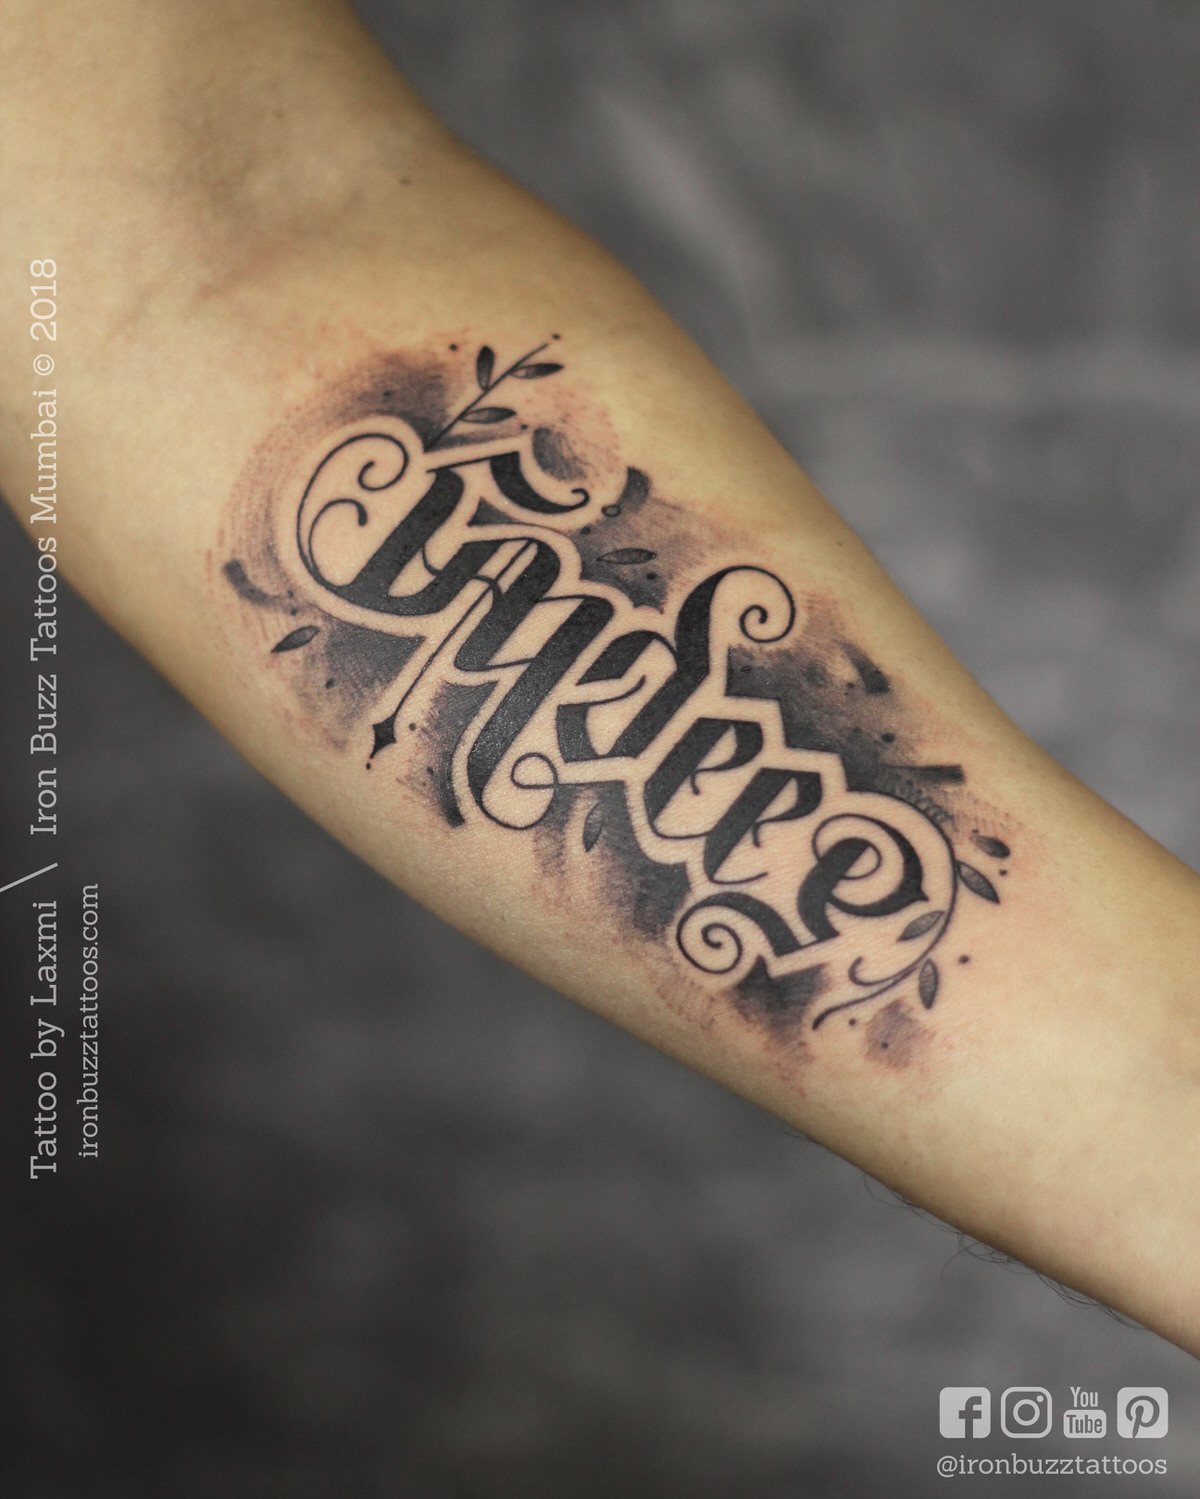 Laxmi Bhalabhai  Best Tattoos Artist in Indiabr  Iron Buzz Tattoos